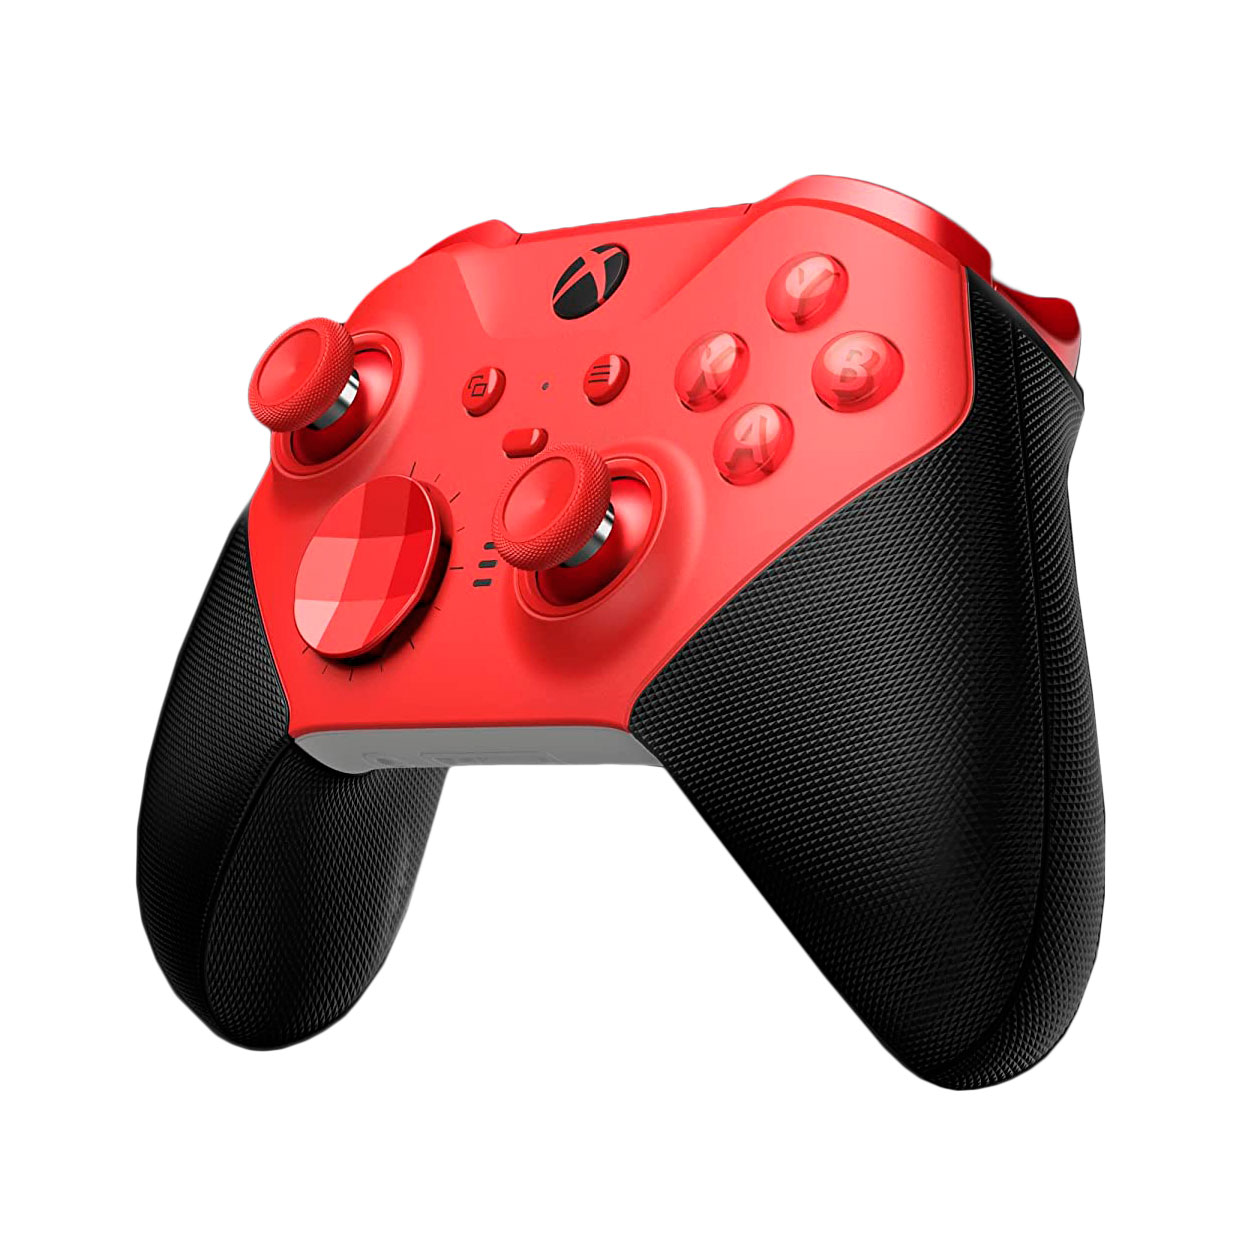 Беспроводной геймпад Microsoft Xbox Elite Series 2, красный/черный сумка чехол airform controller pouch для геймпада sony dualshock 4 wireless controller черный ps4